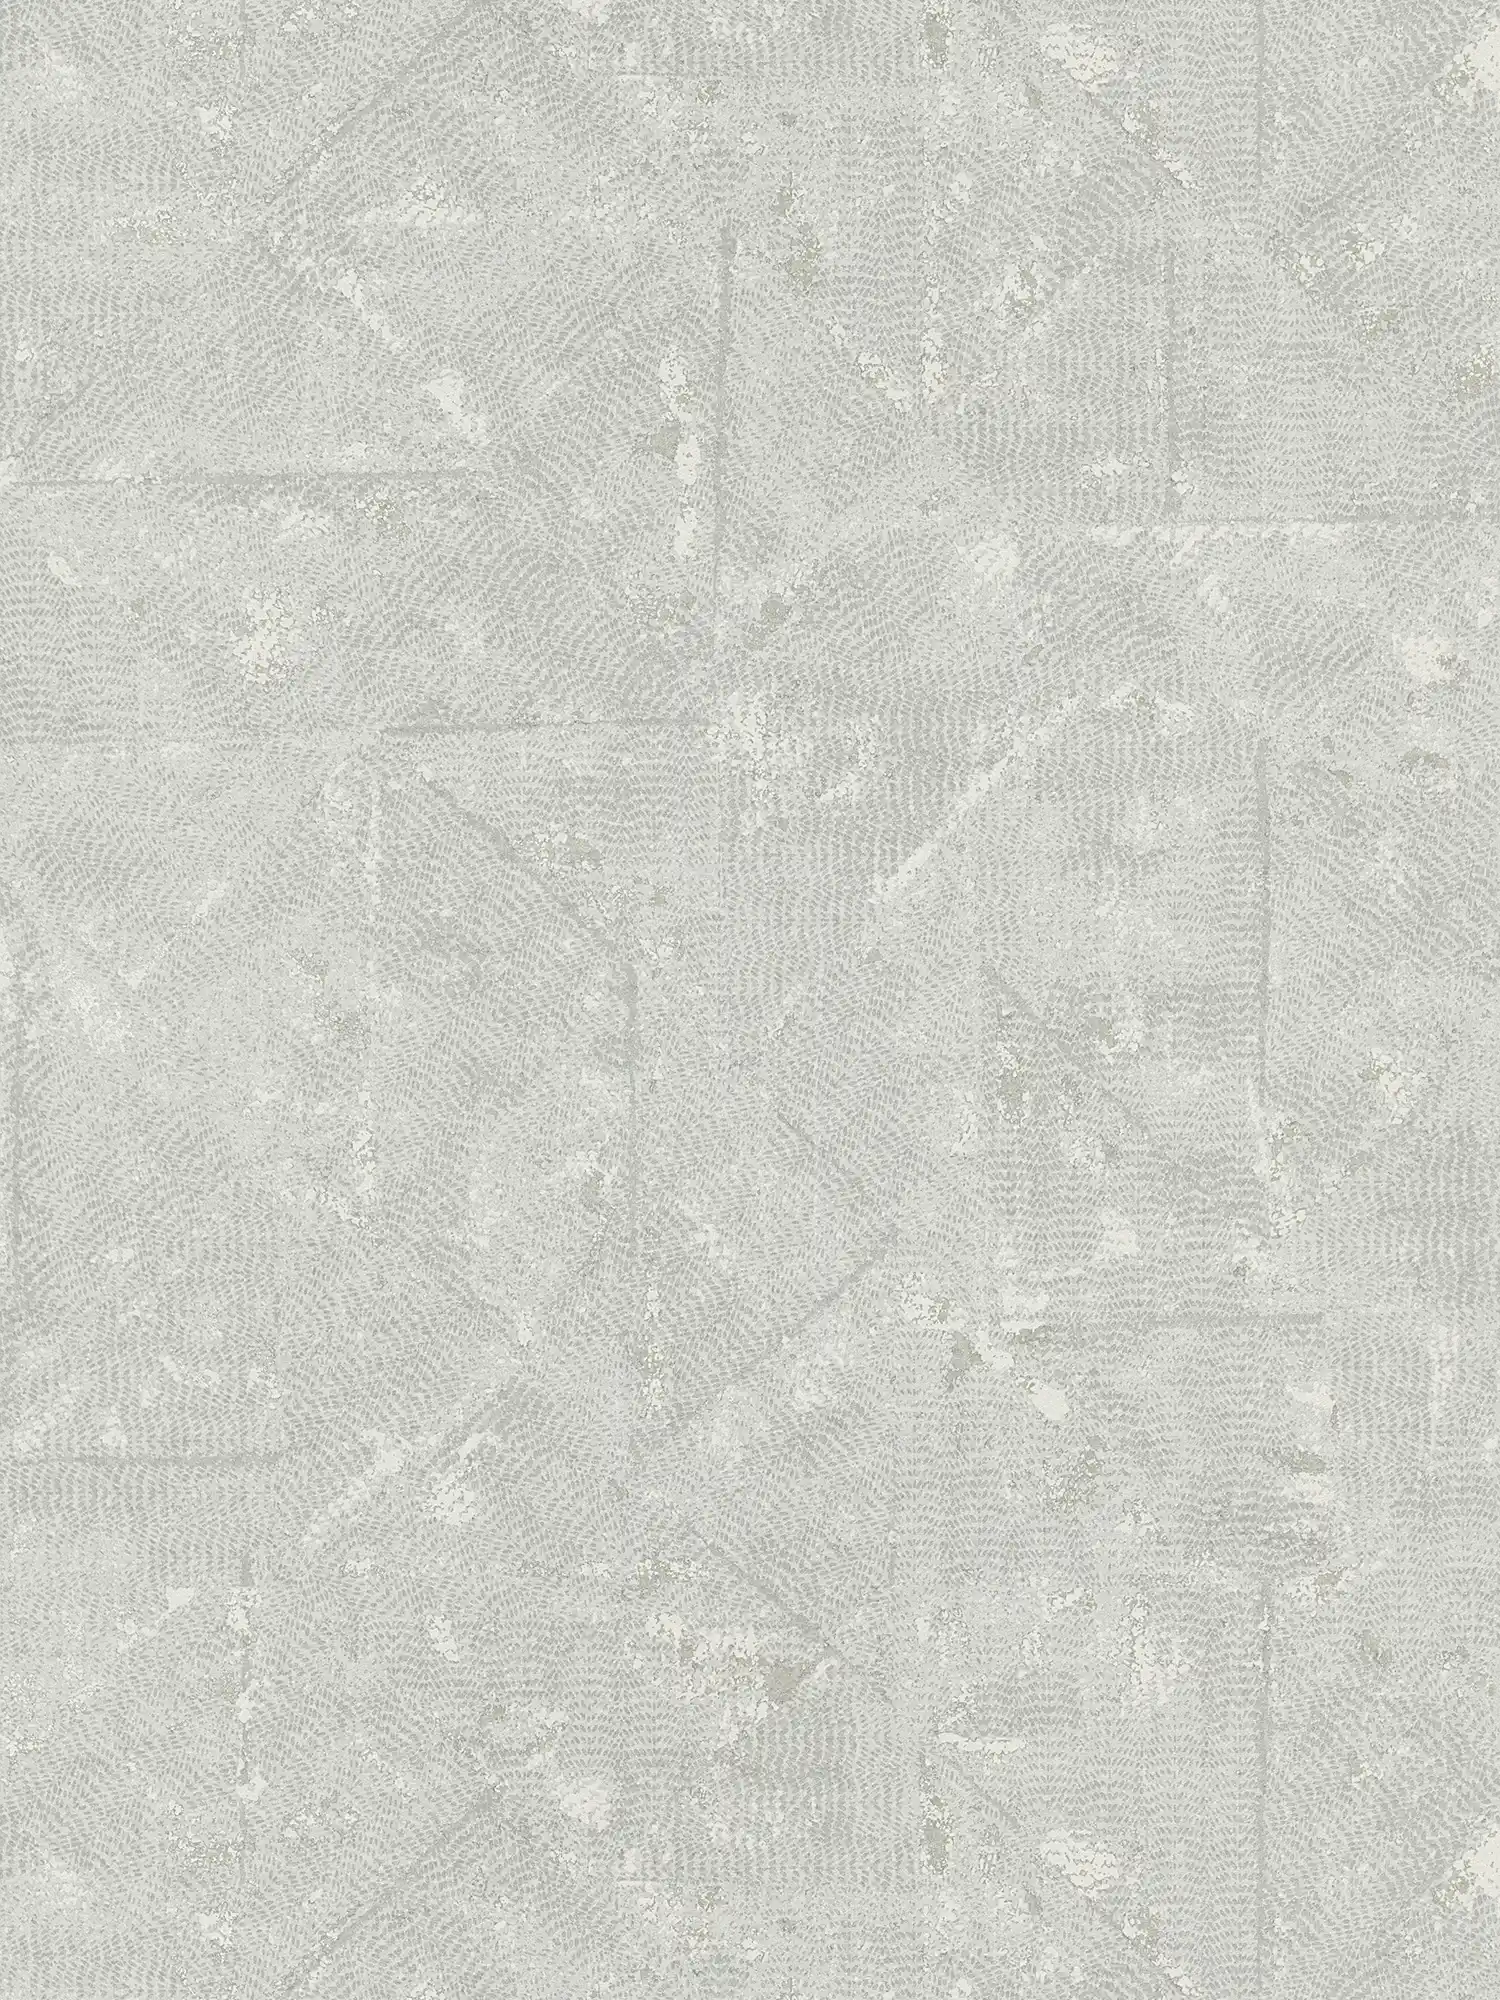 Light grey plain wallpaper with asymmetrical details - grey, silver
